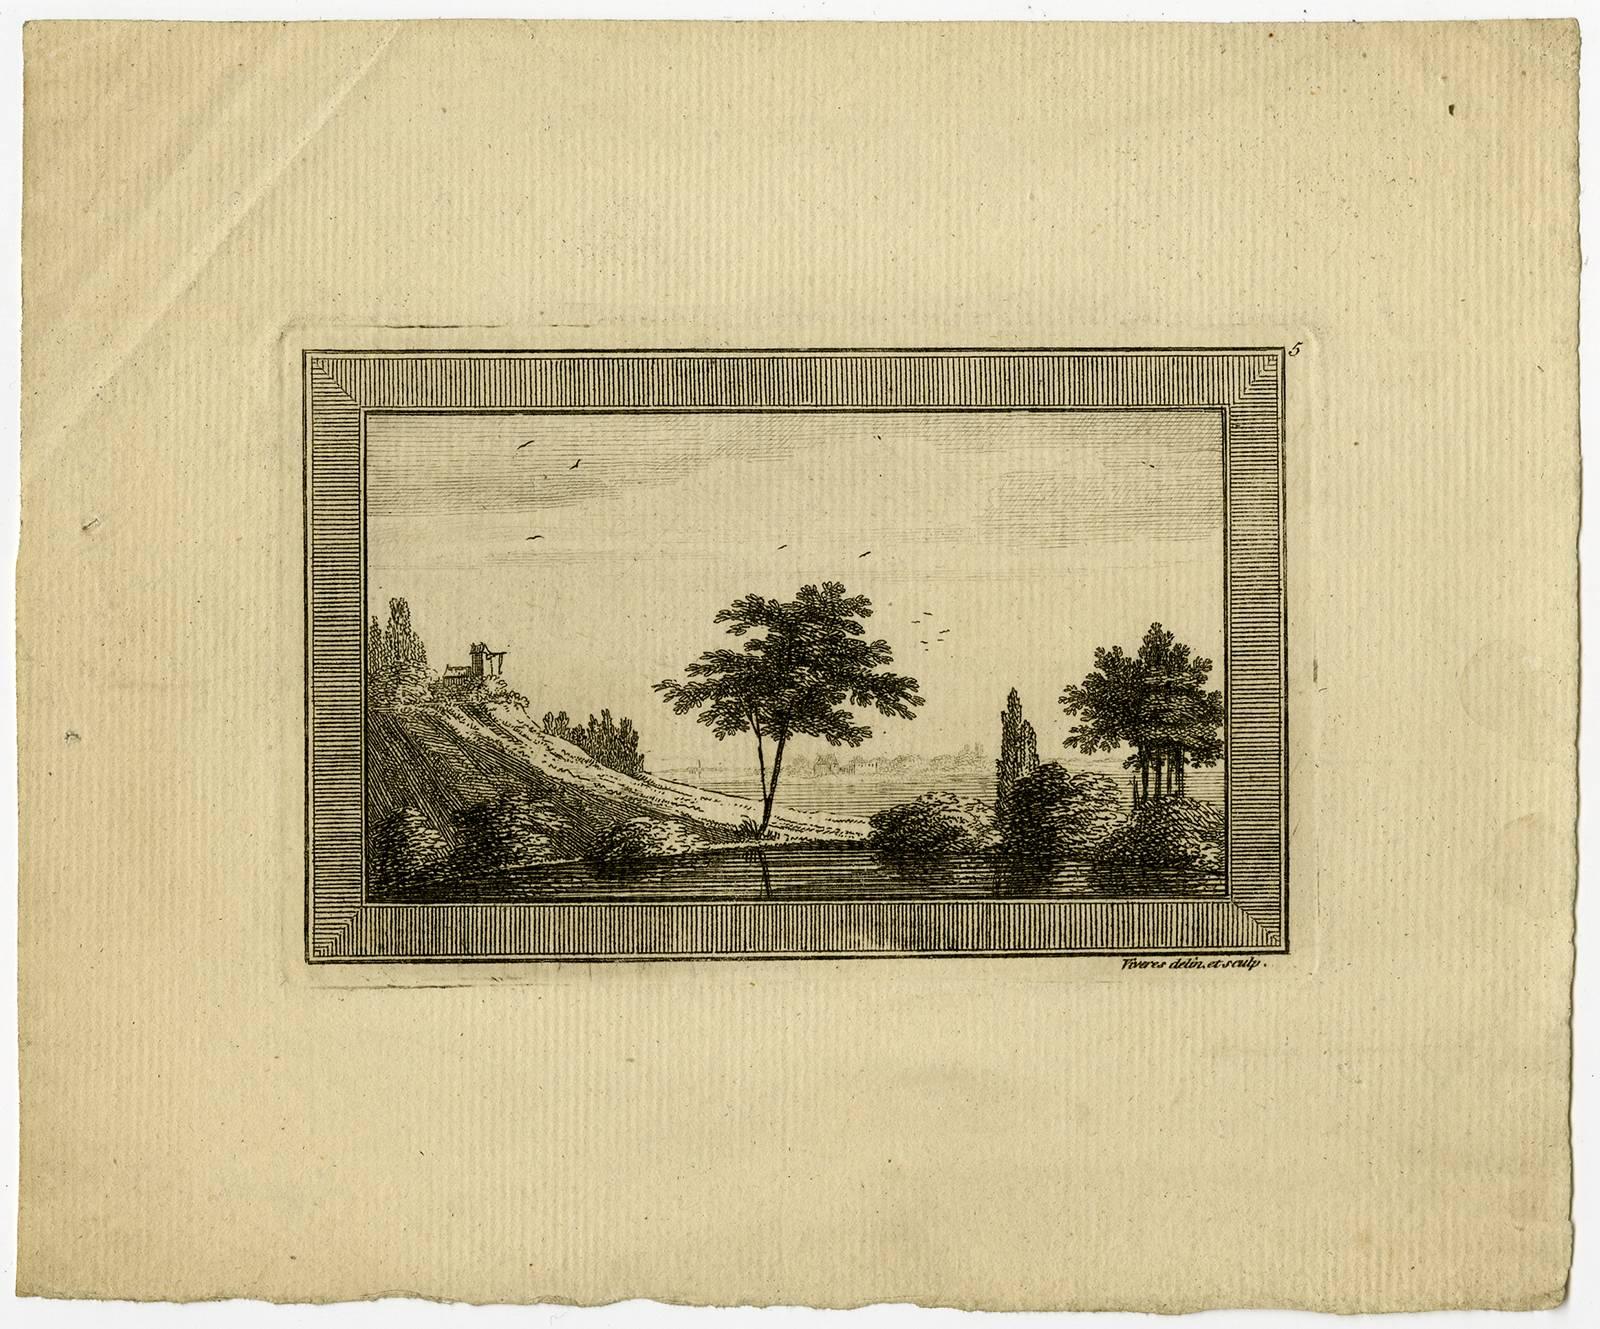 Francois Vivares Landscape Print - Untitled -This print shows shows a river landscape with trees and a lodge [...].